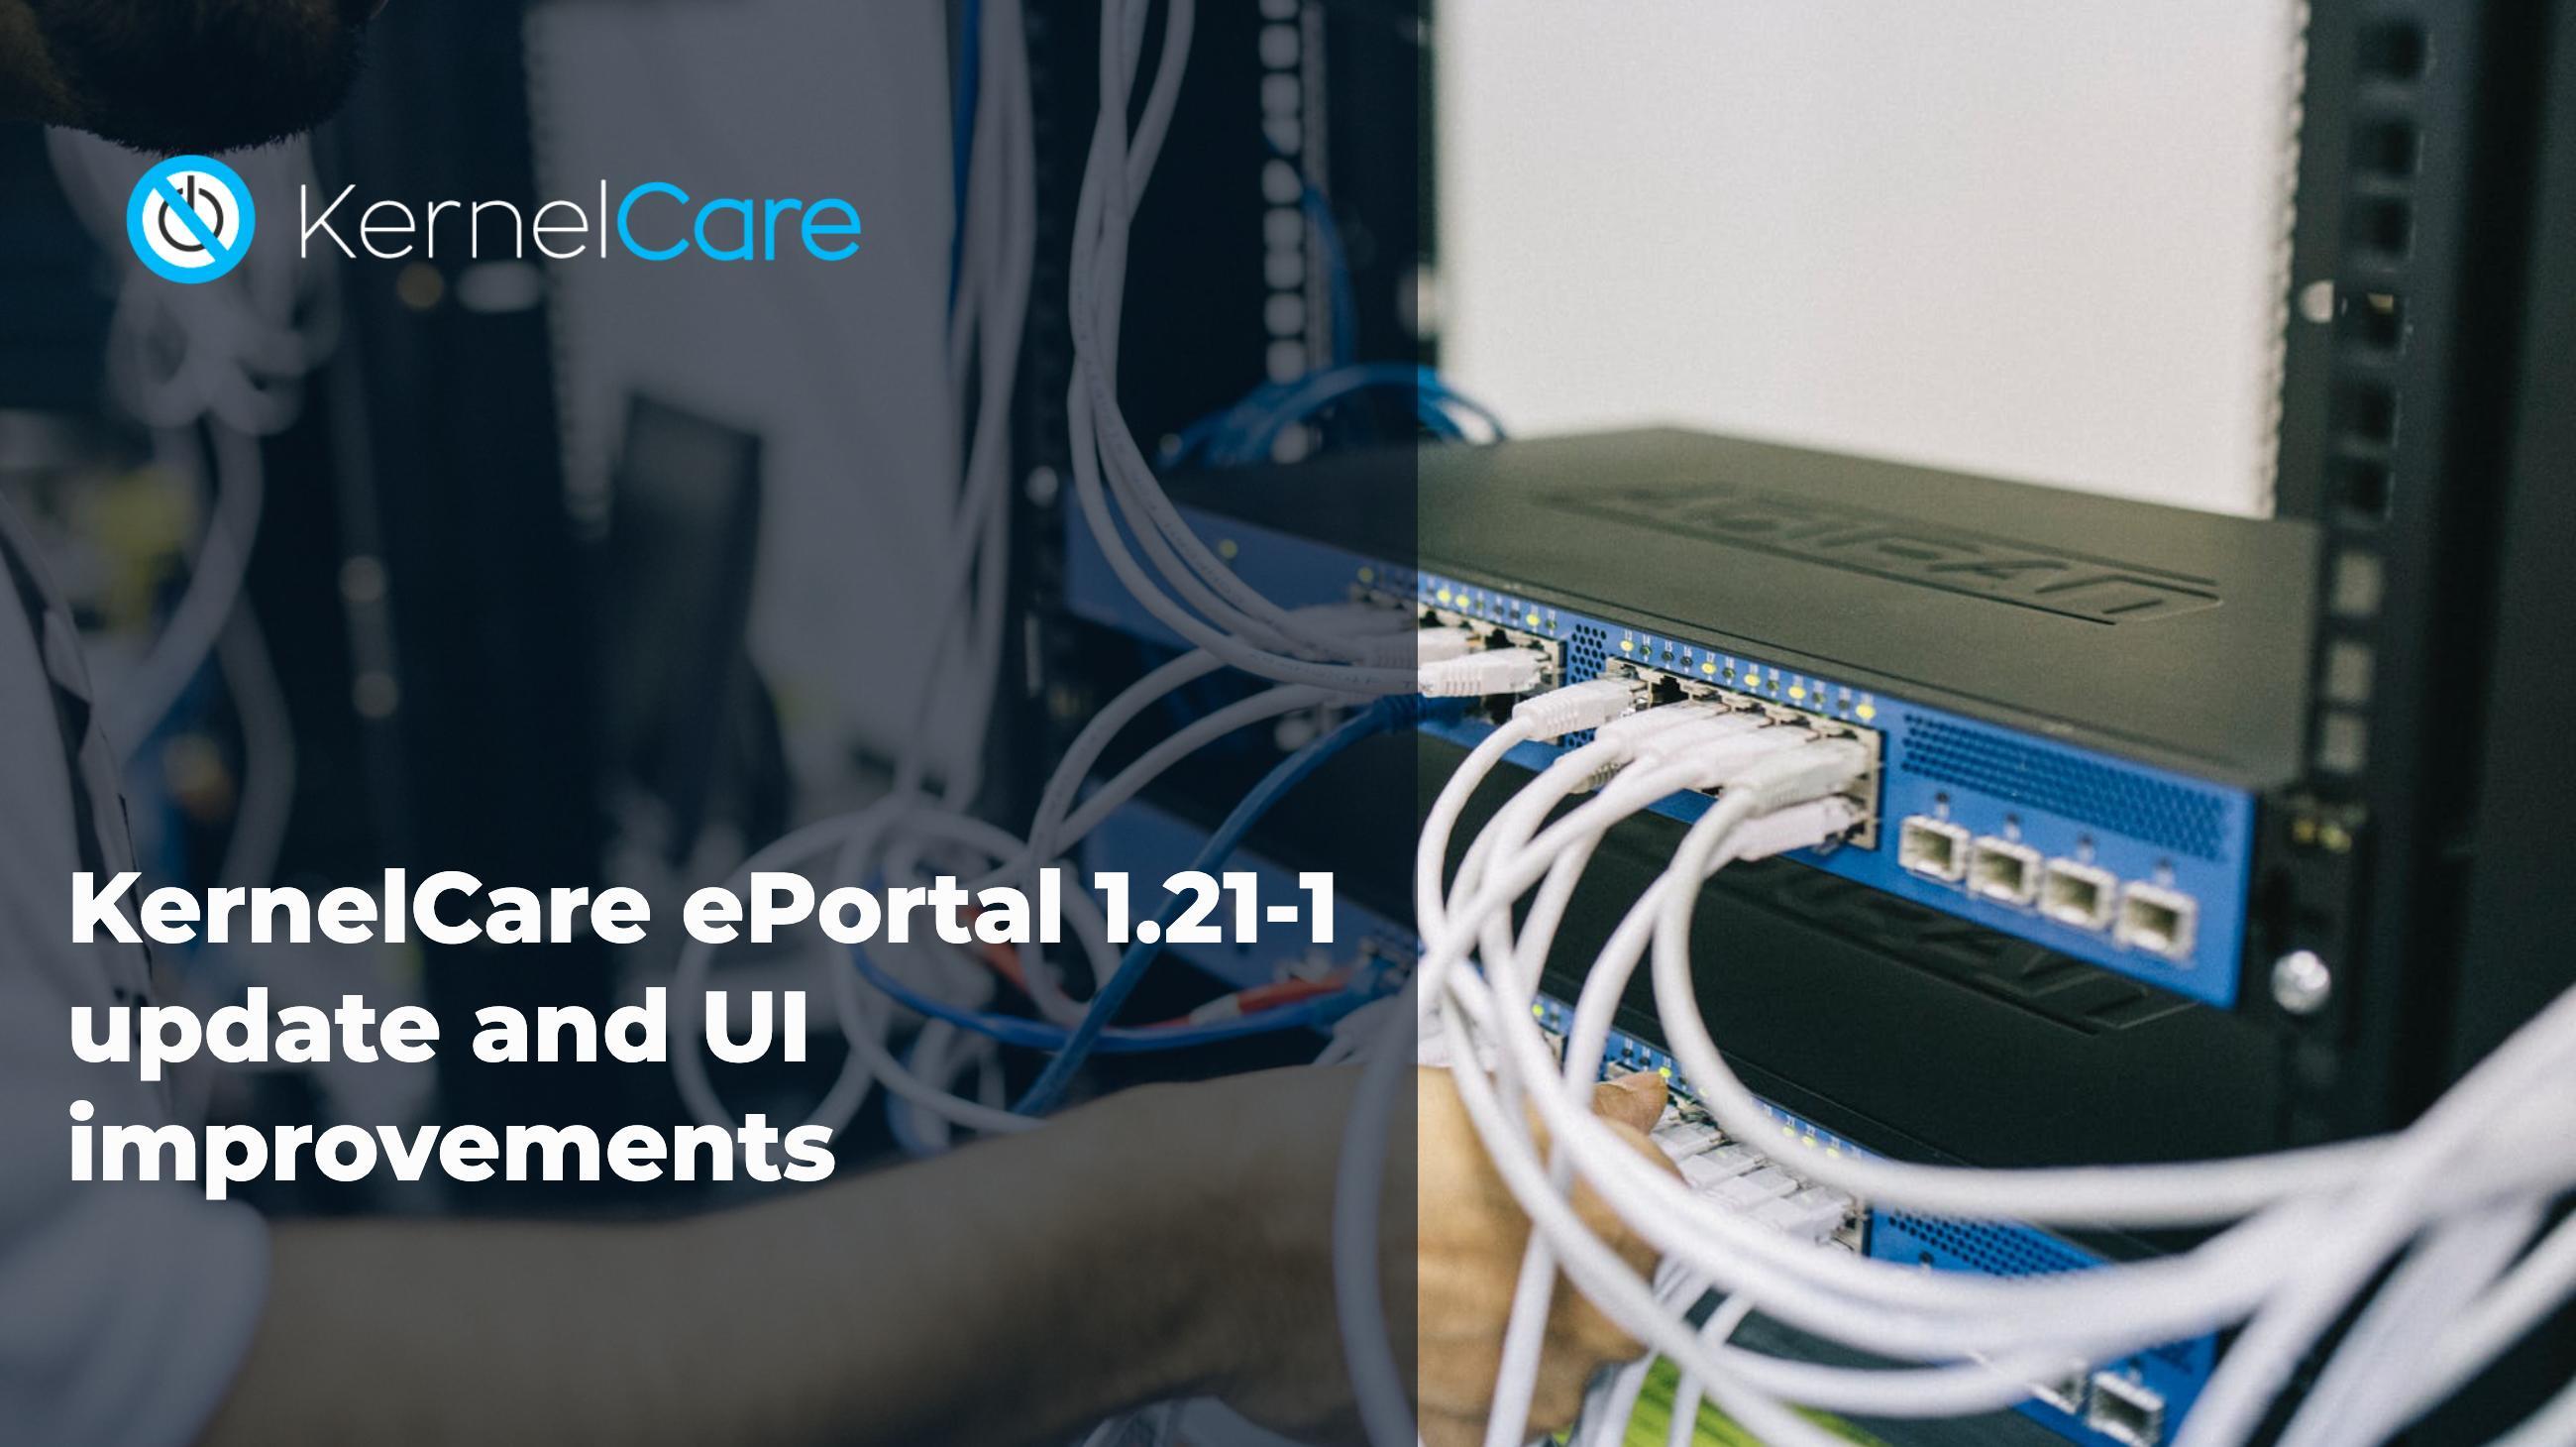 KernelCare ePortal 1.21-1 update and UI improvements